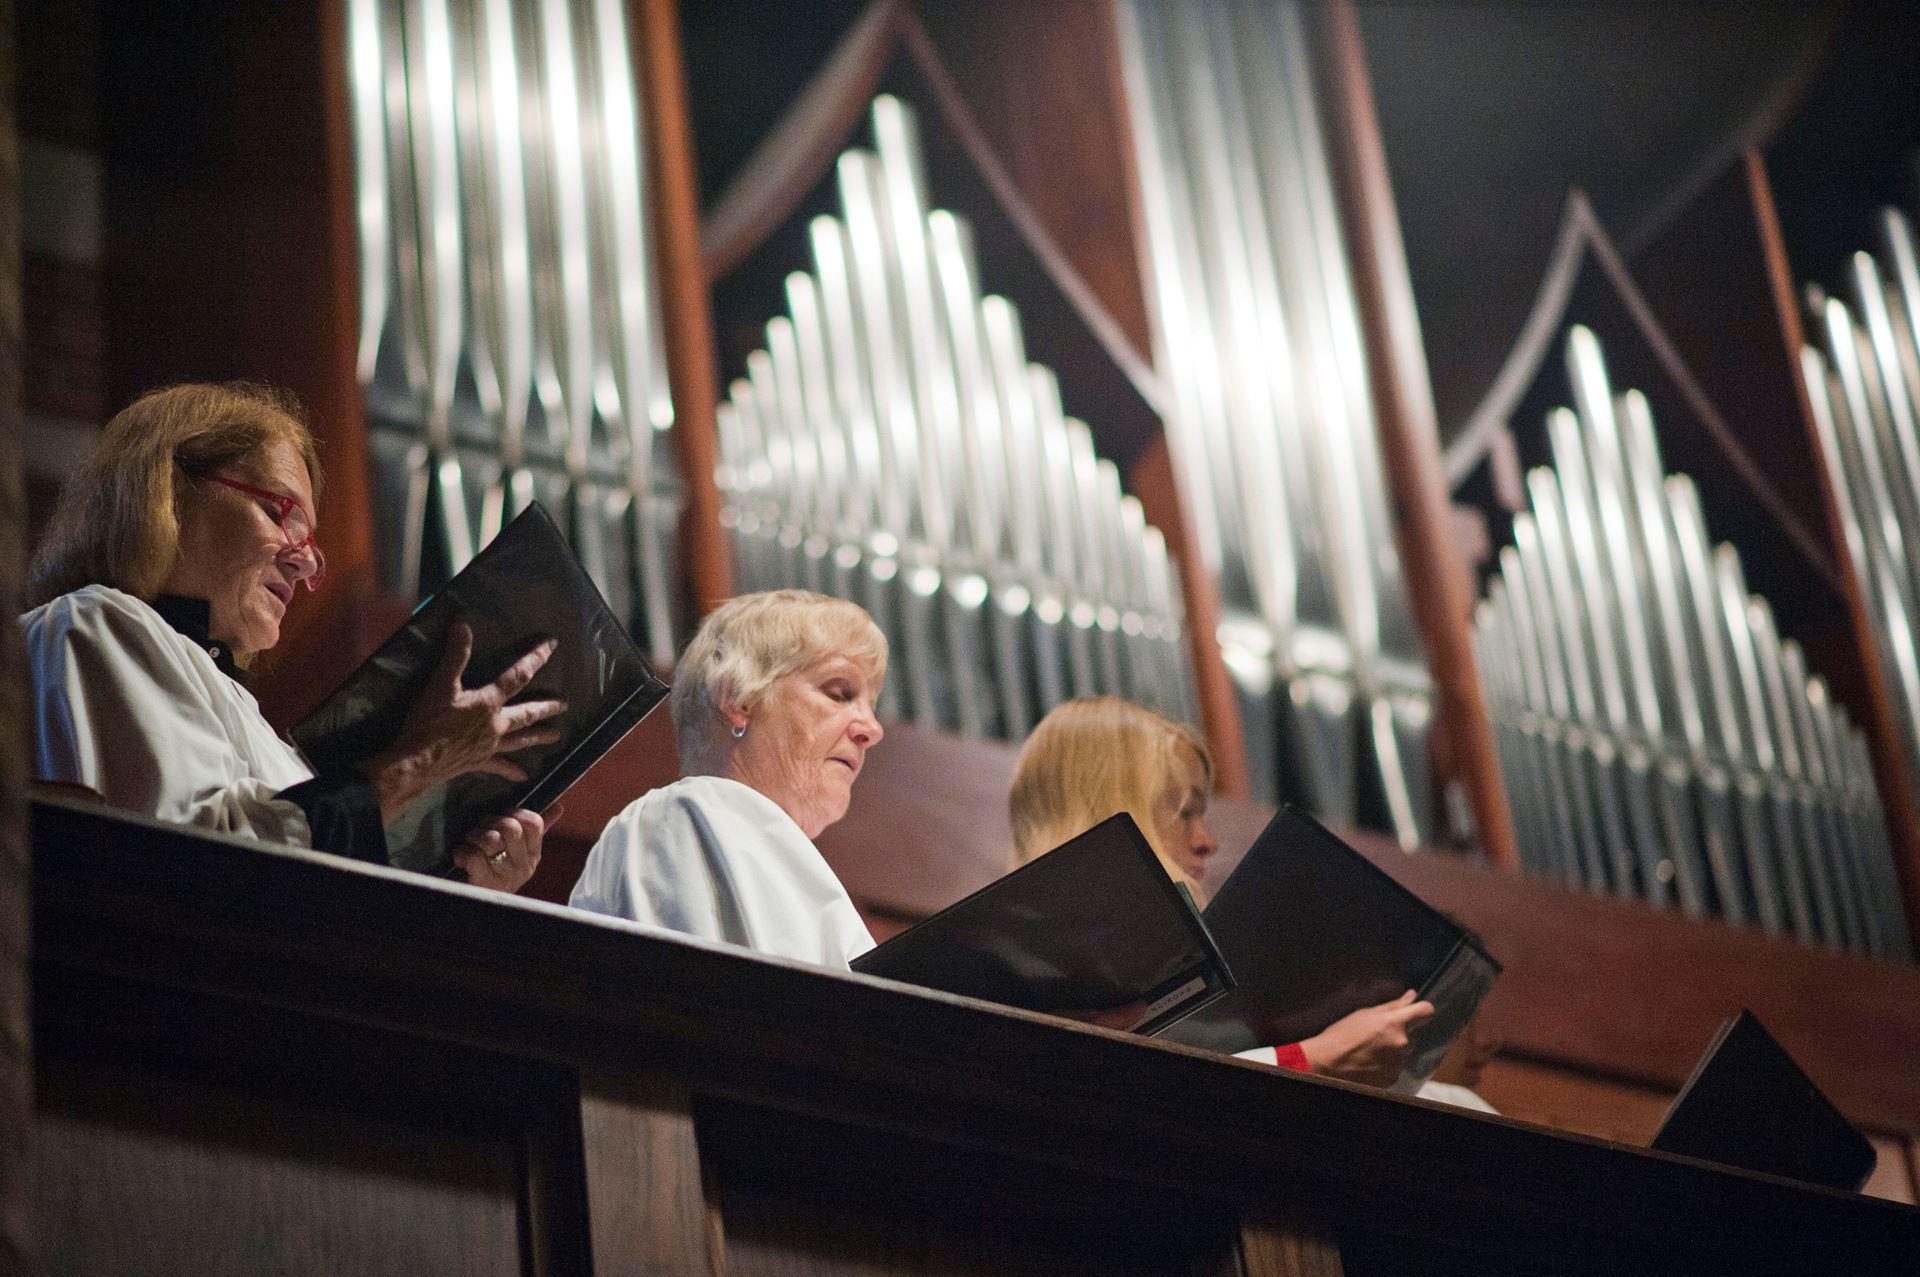 Members of Parish of the Epiphany's choir singing in choir loft in front of pipe organ